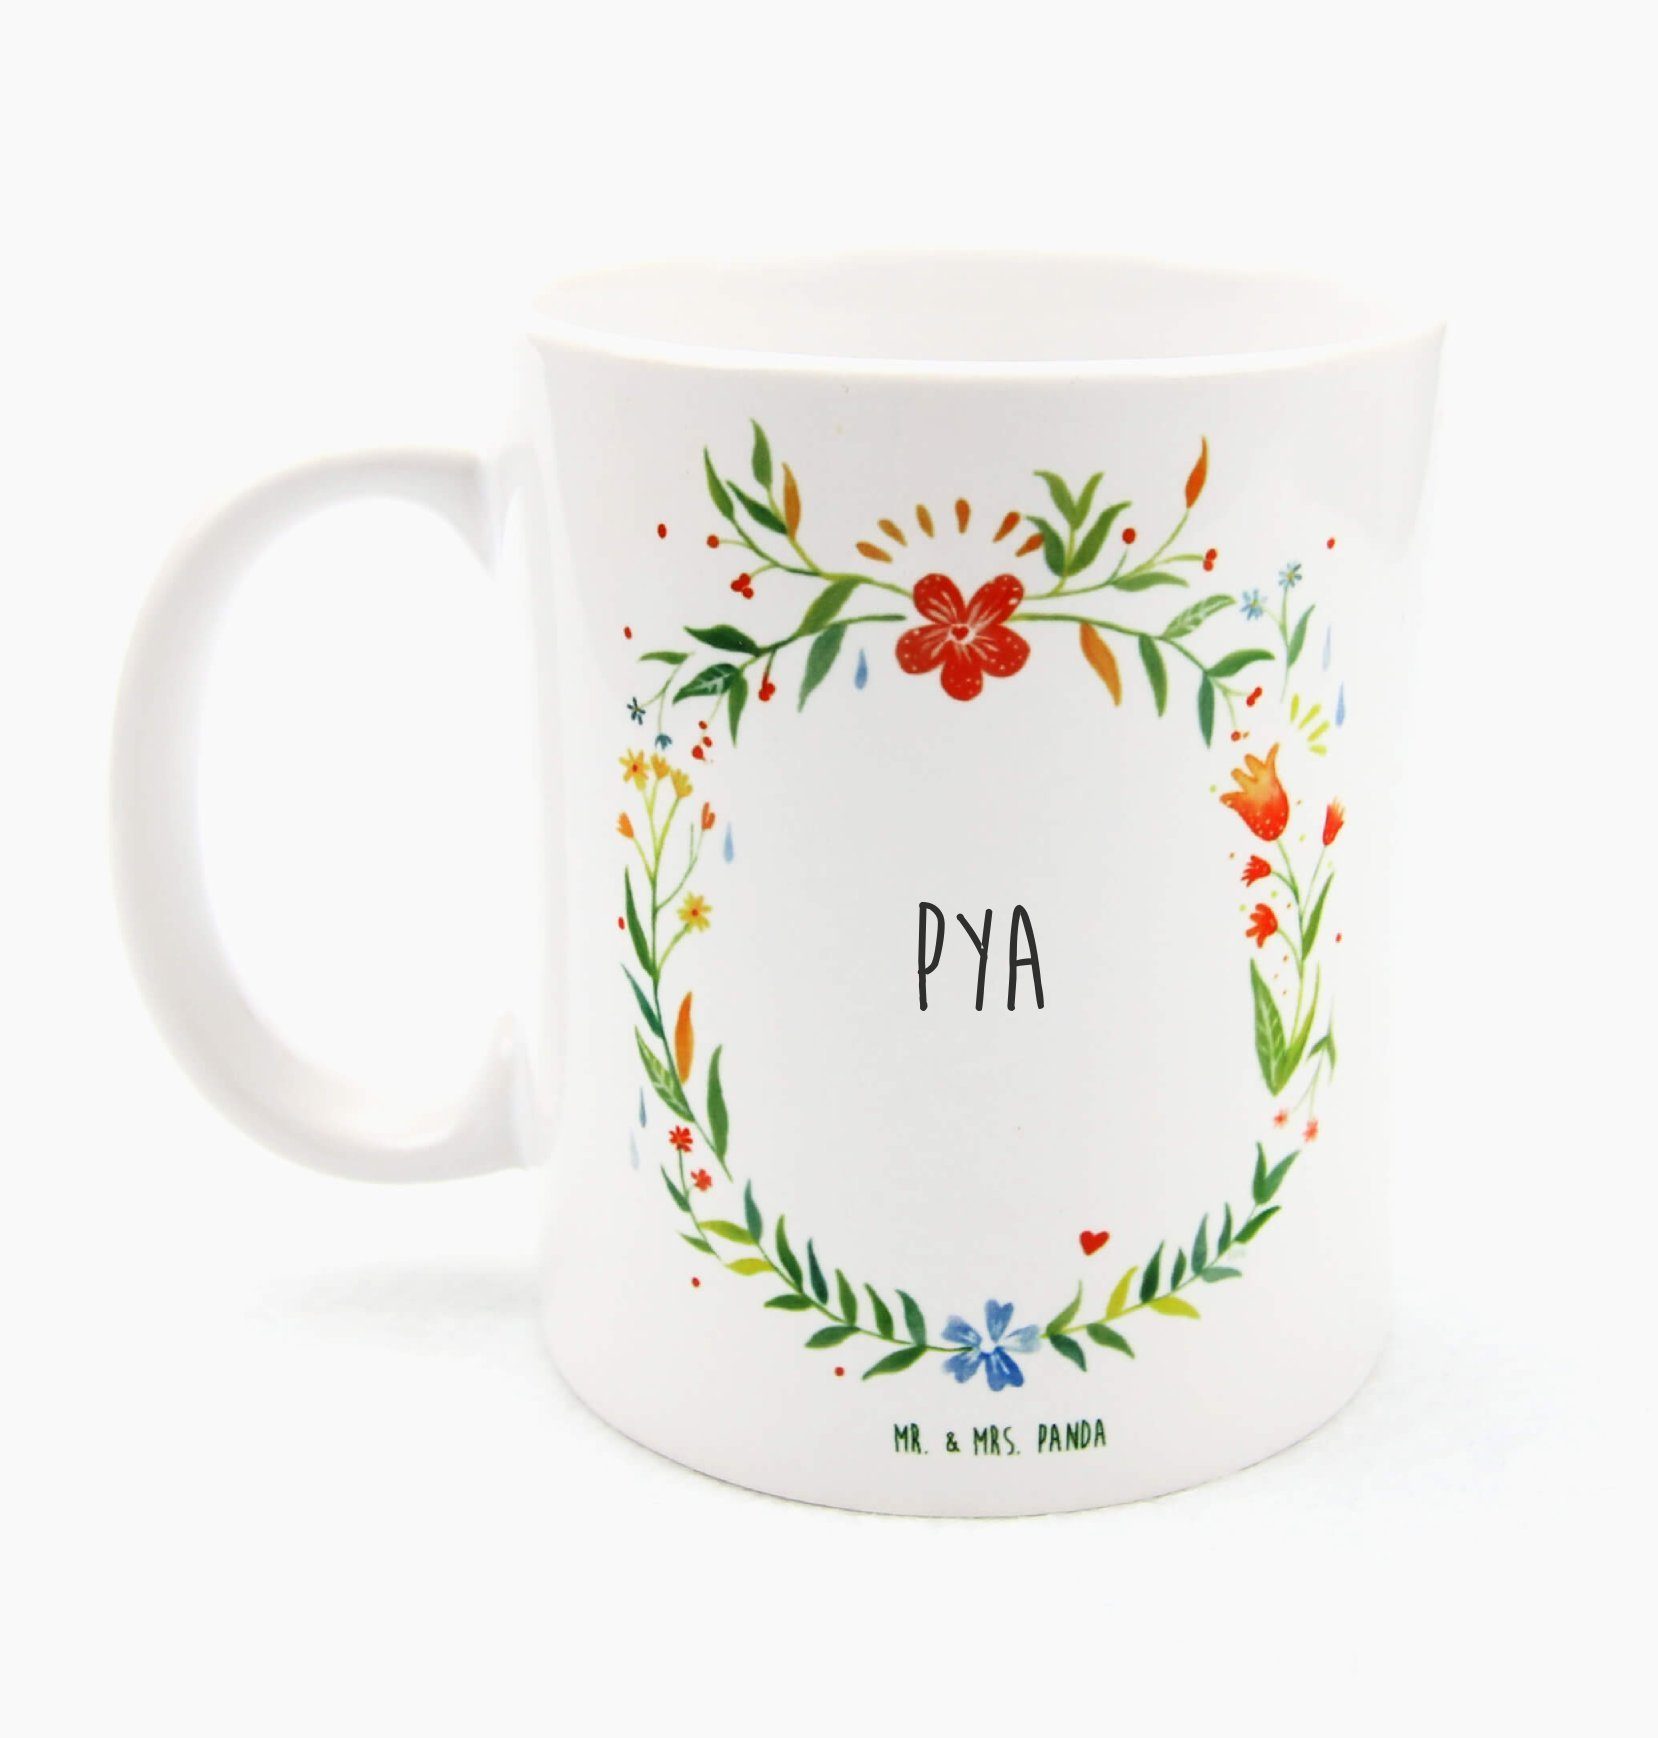 Mr. & Mrs. Panda Tasse Pya - Geschenk, Büro Tasse, Teetasse, Tasse Motive, Kaffeebecher, Por, Keramik